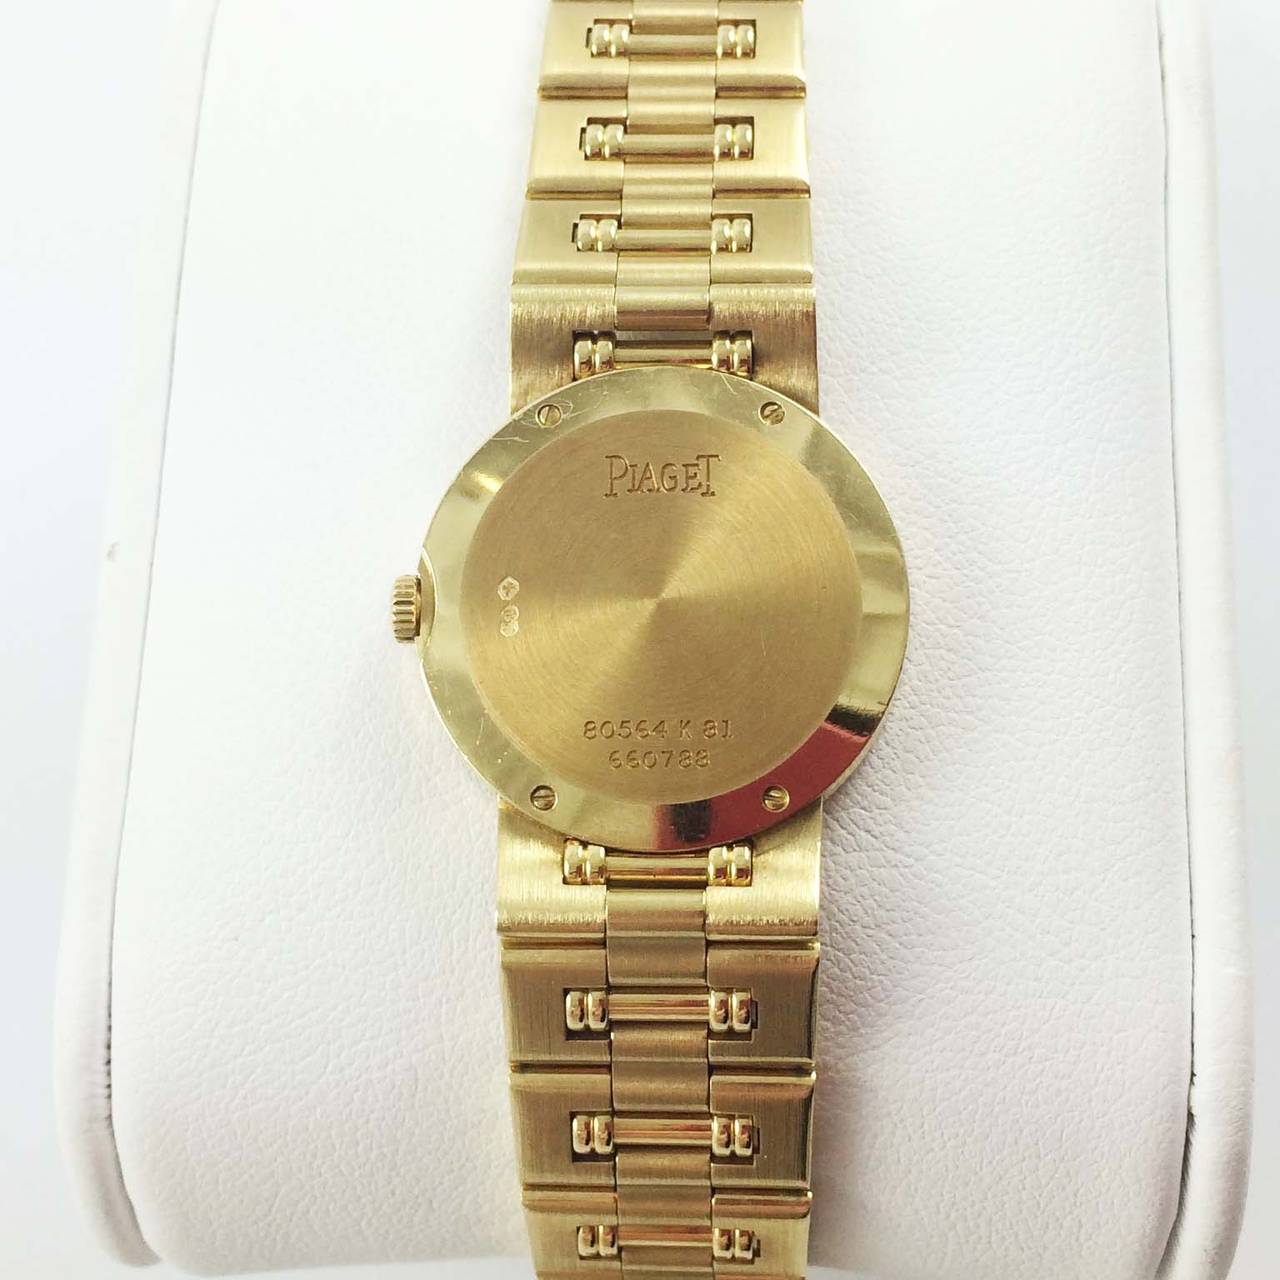 Piaget 18K yellow gold diamond Dancer bracelet watch, diamonds on bezel, gilt dial, gold dots on dial, gold hands, quartz movement.
New in box
Never worn
Original two year warranty
Retail price $22,400.00